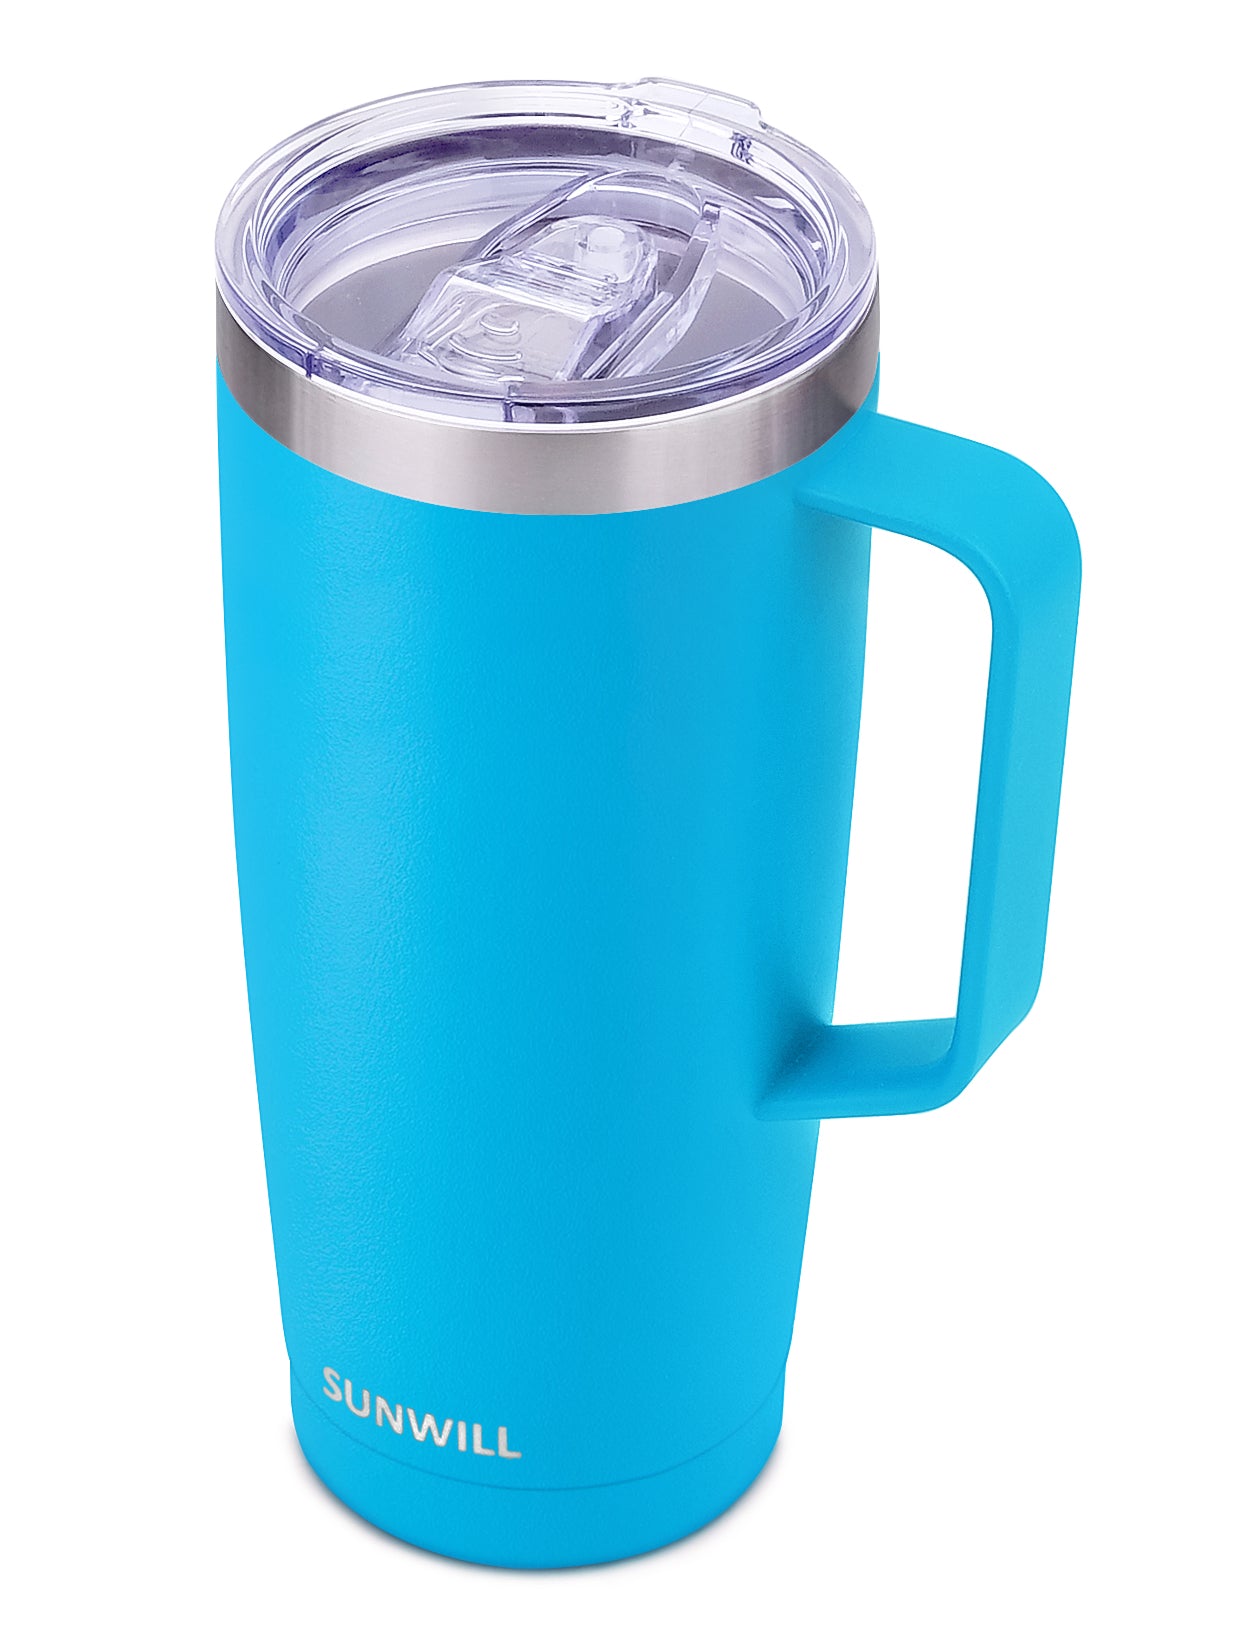 SUNWILL Sliding Lid Insulated Coffee Mug, 20-Ounce